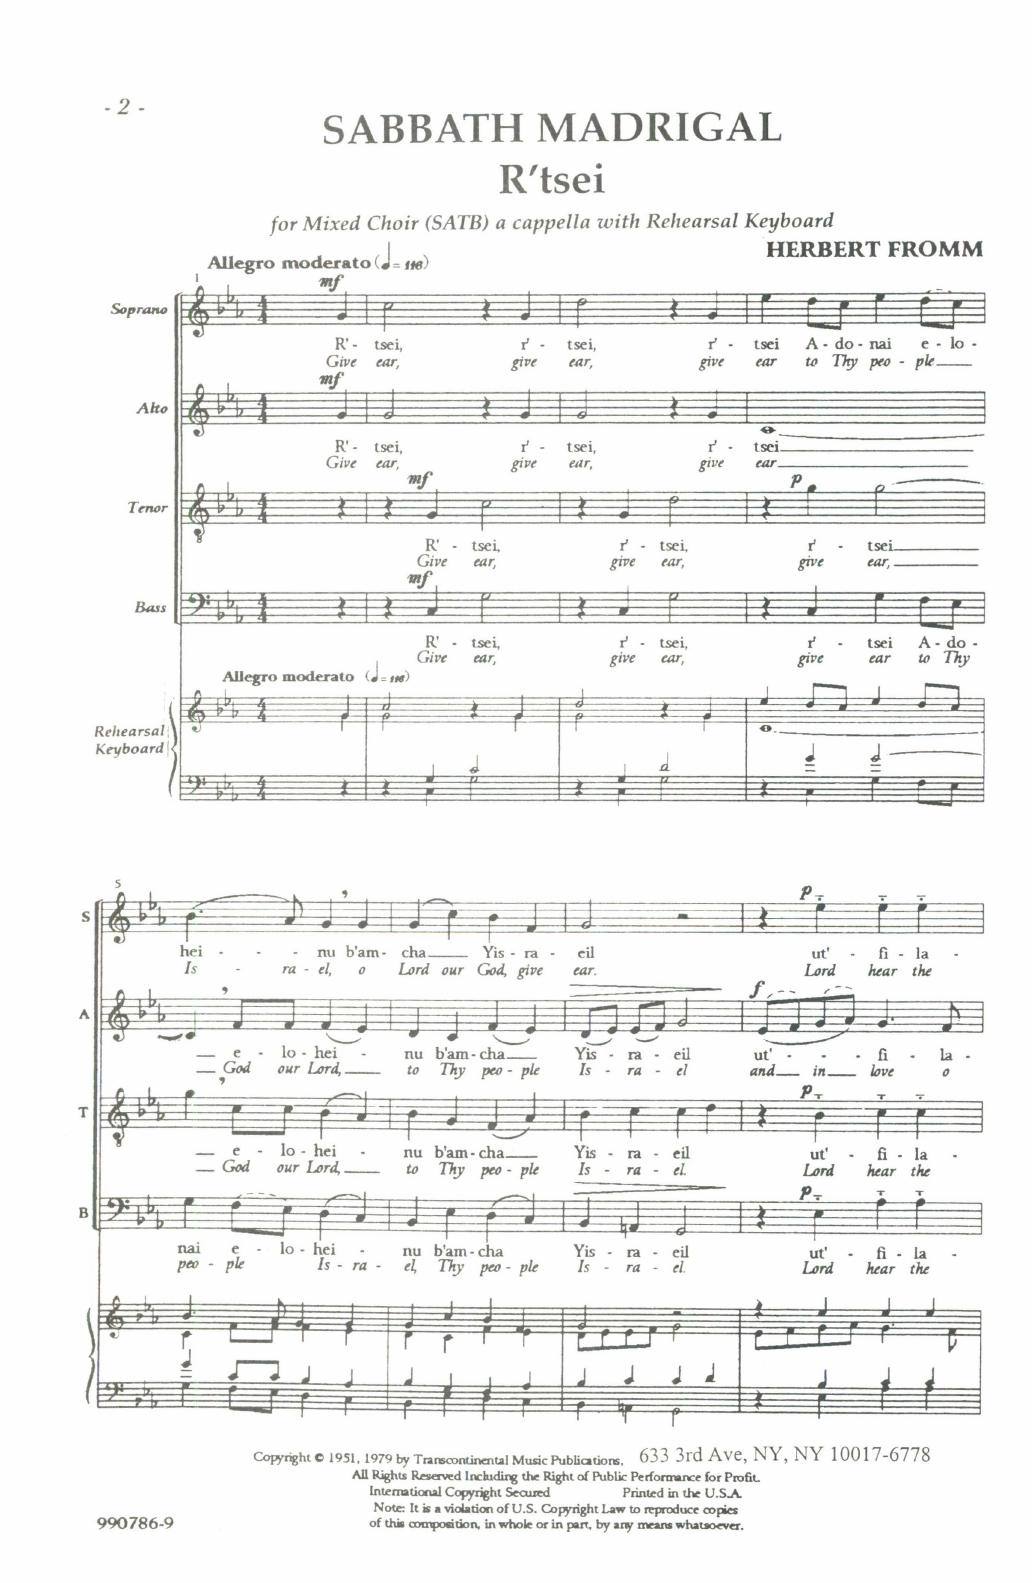 Herbert Fromm Sabbath Madrigal (R'tsei) sheet music notes and chords arranged for SATB Choir